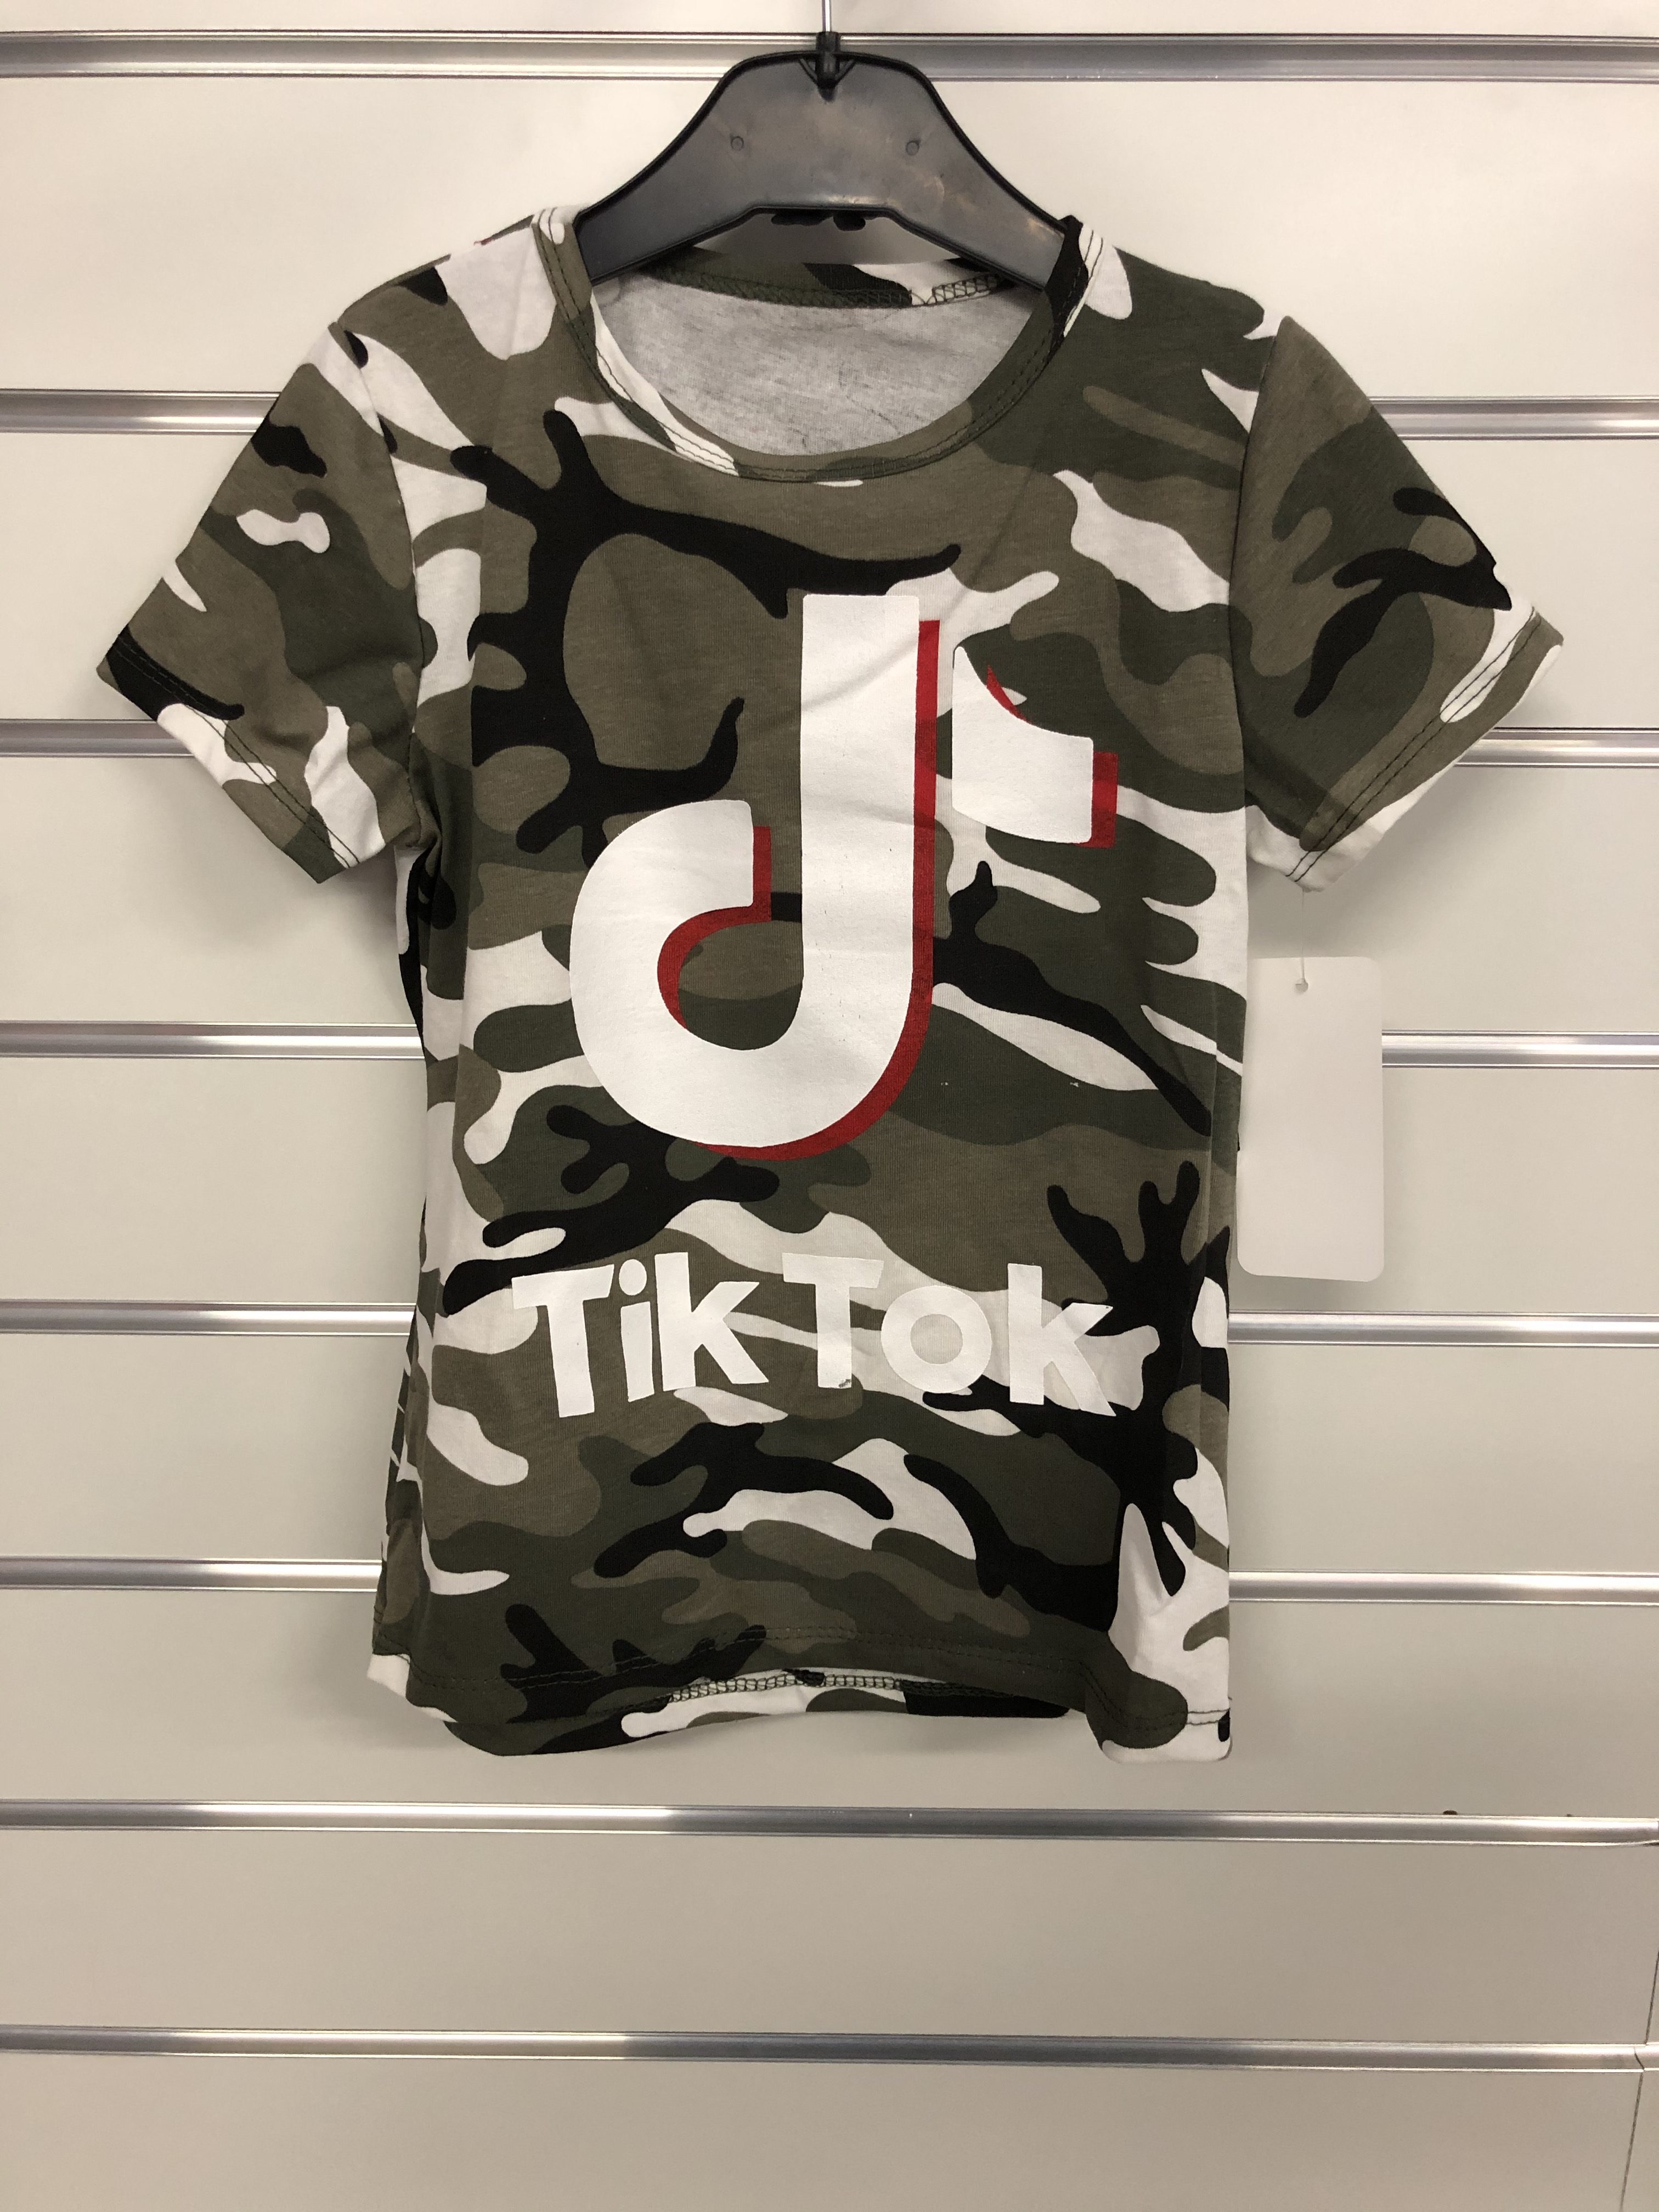 Cool Tik-tok-tshirt Dancing With Music Tik-tok-shirt 2019 ...
 |Tiktok T Shirt Trend